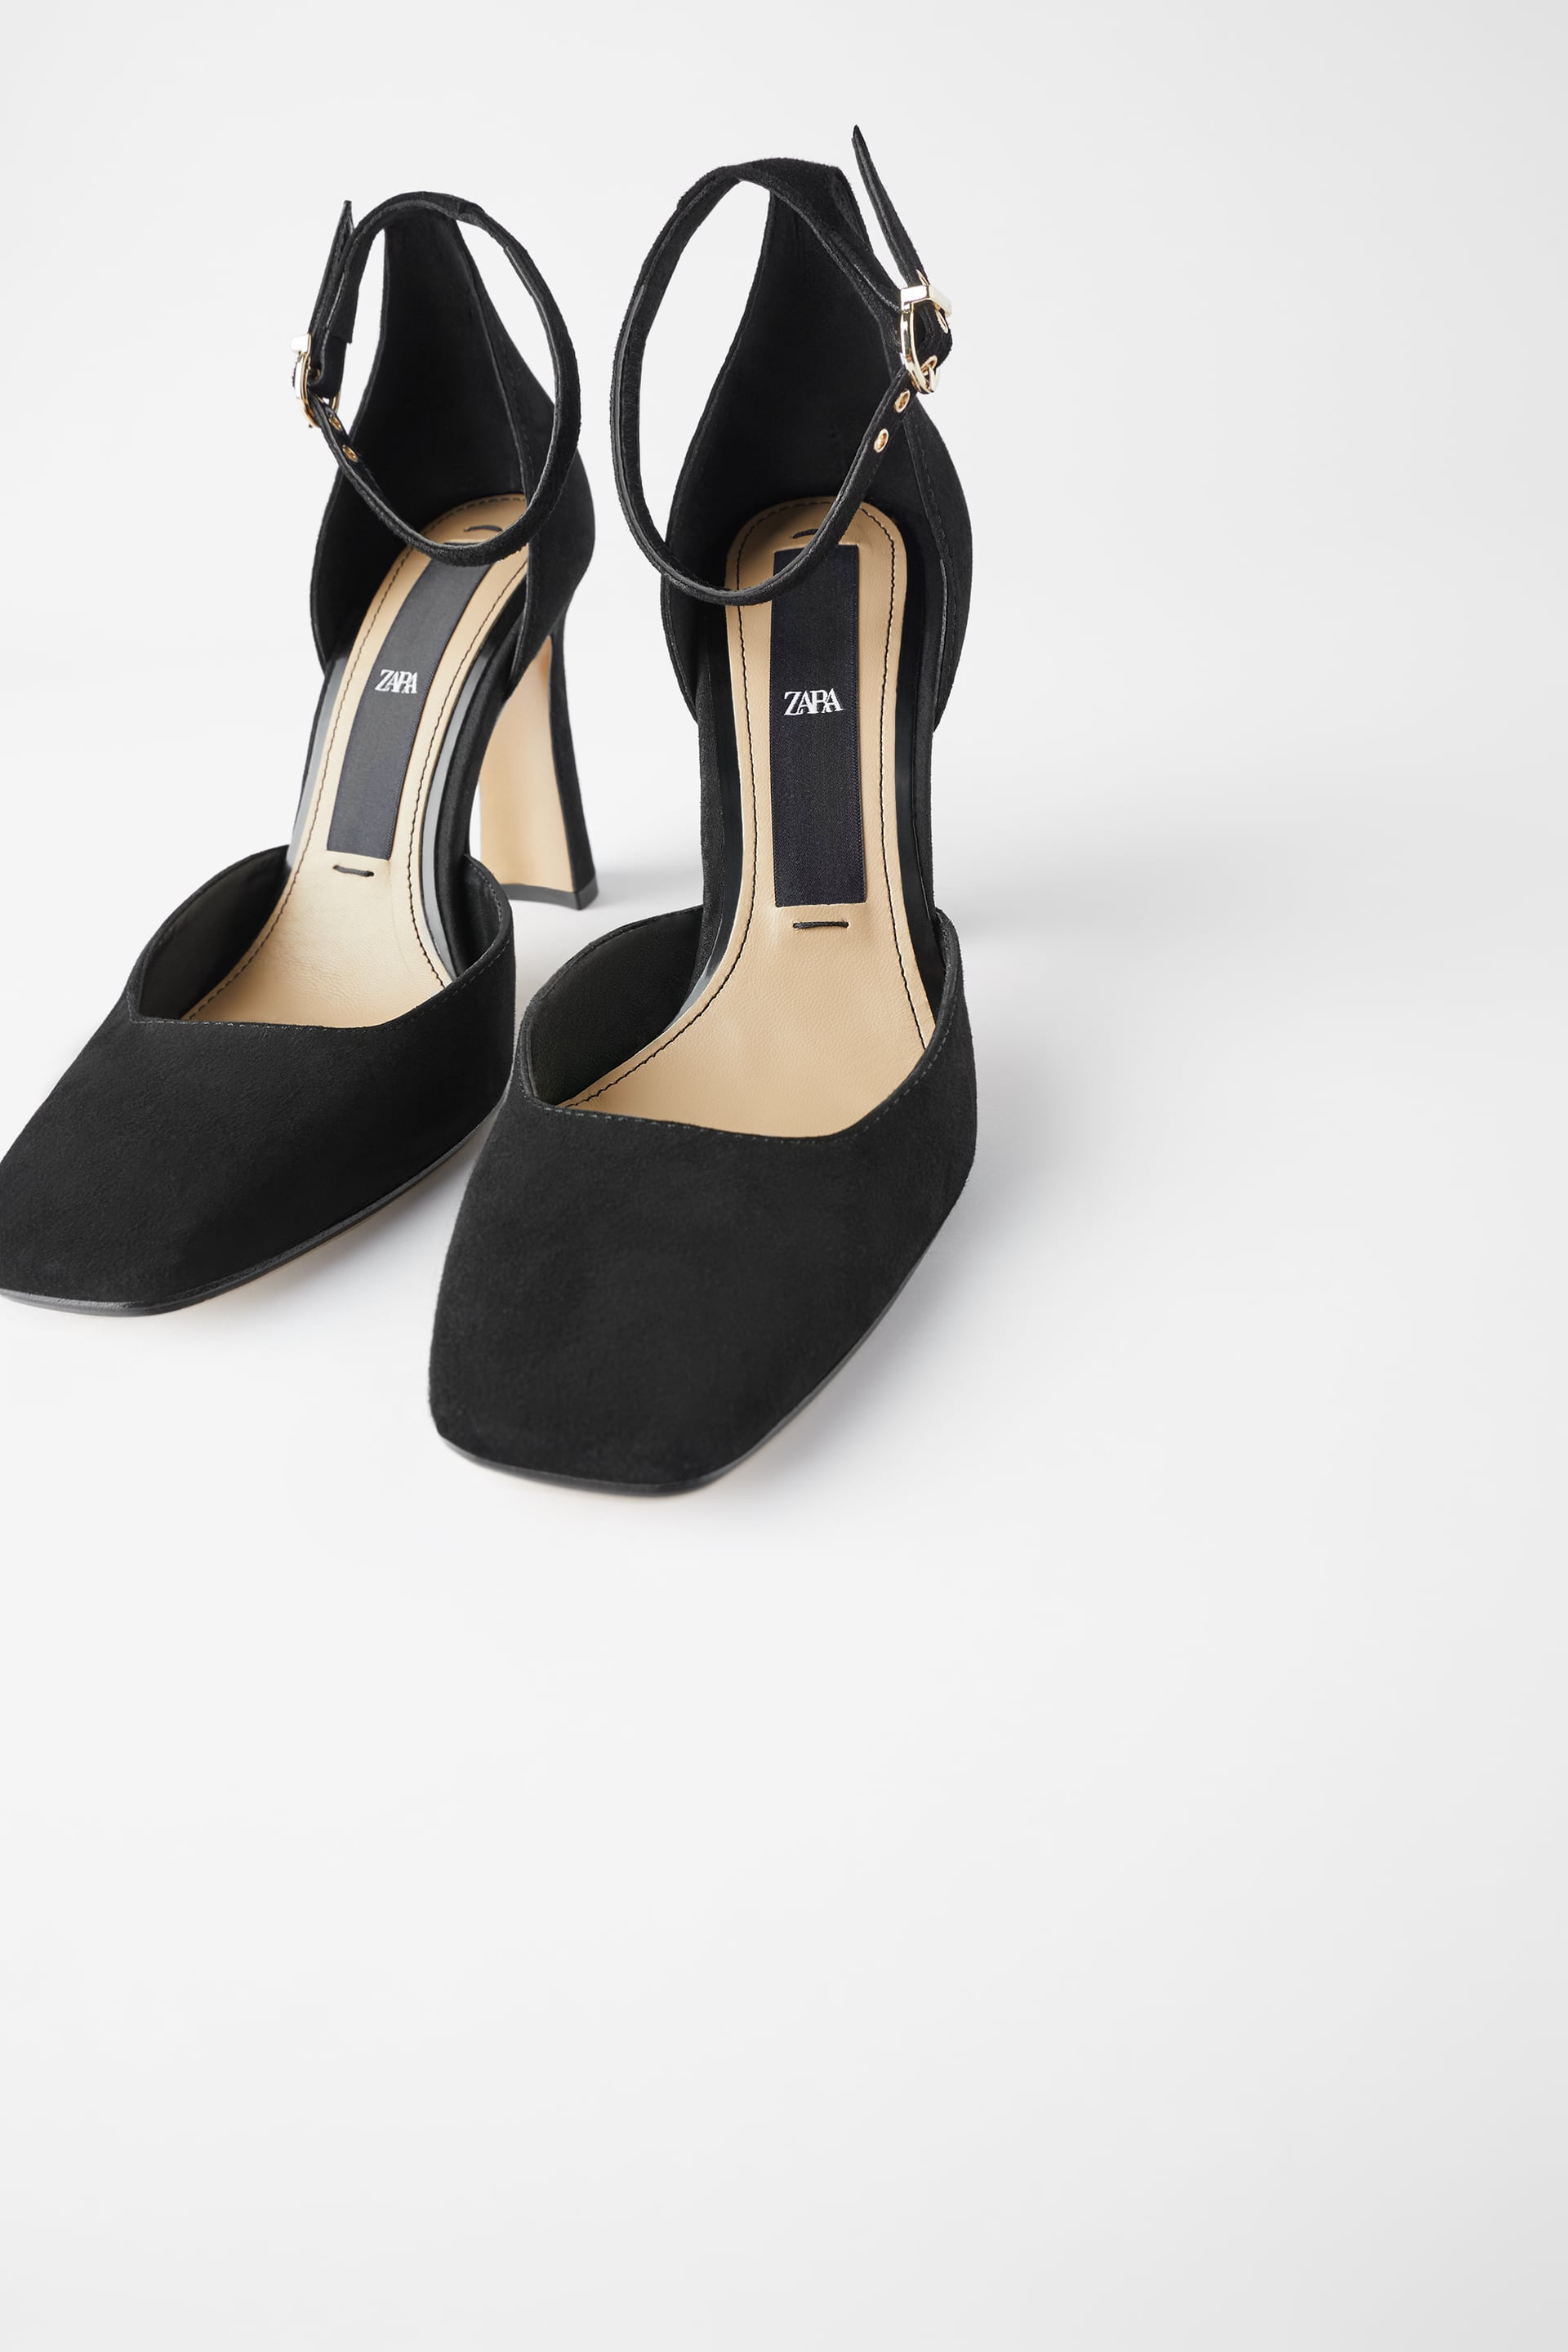 Zara Black Ankle Strap Heels